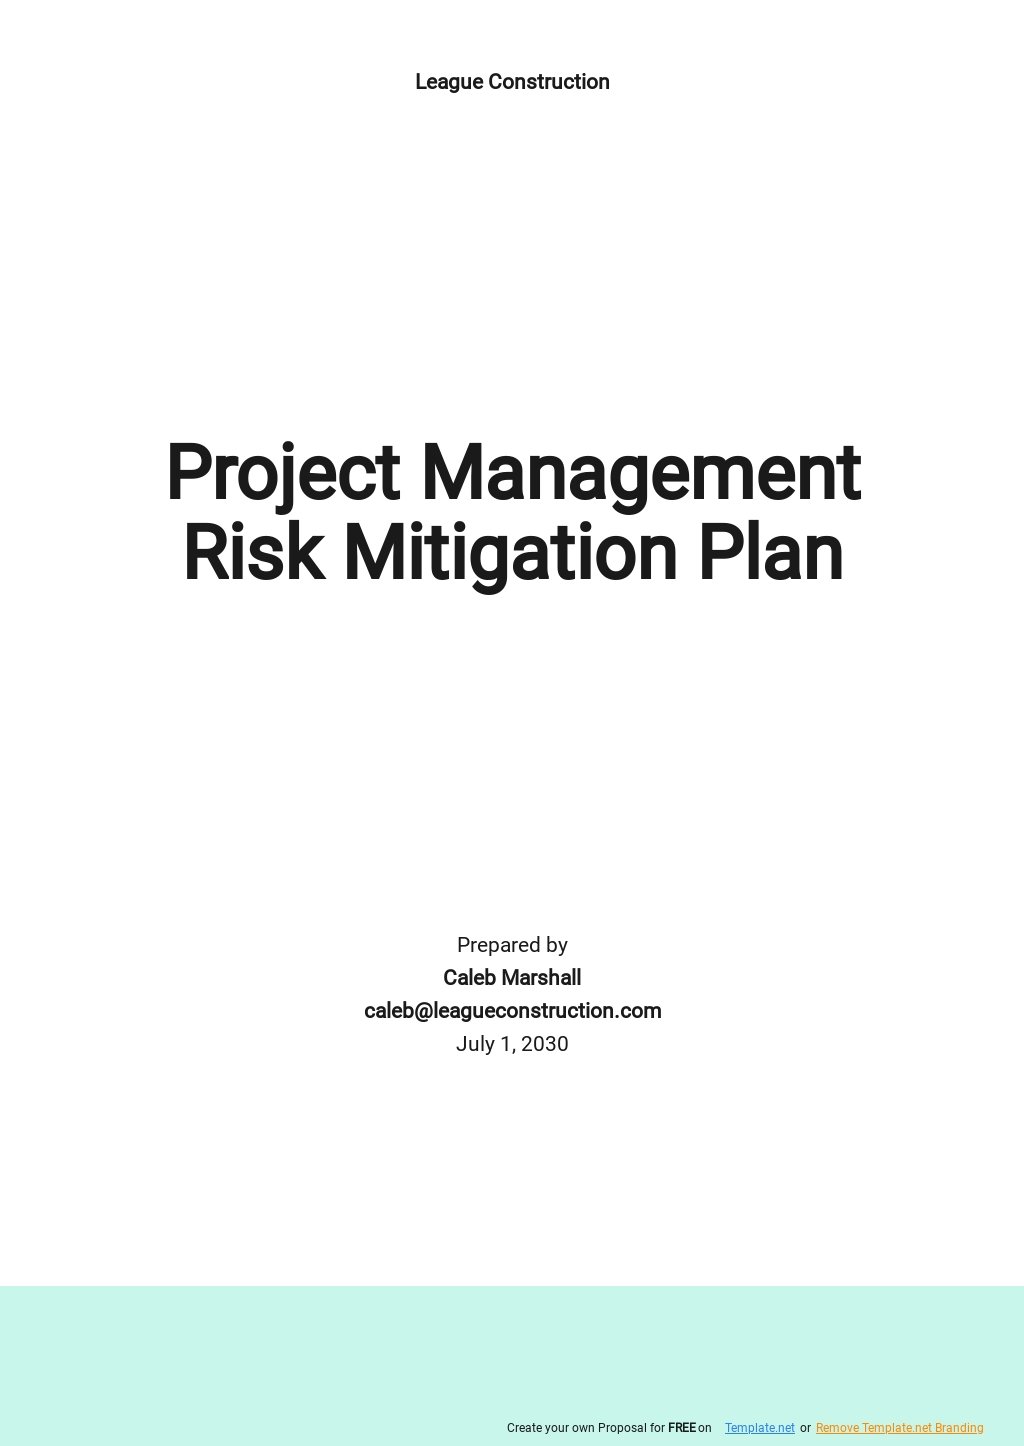 Project Management Risk Mitigation Plan Template